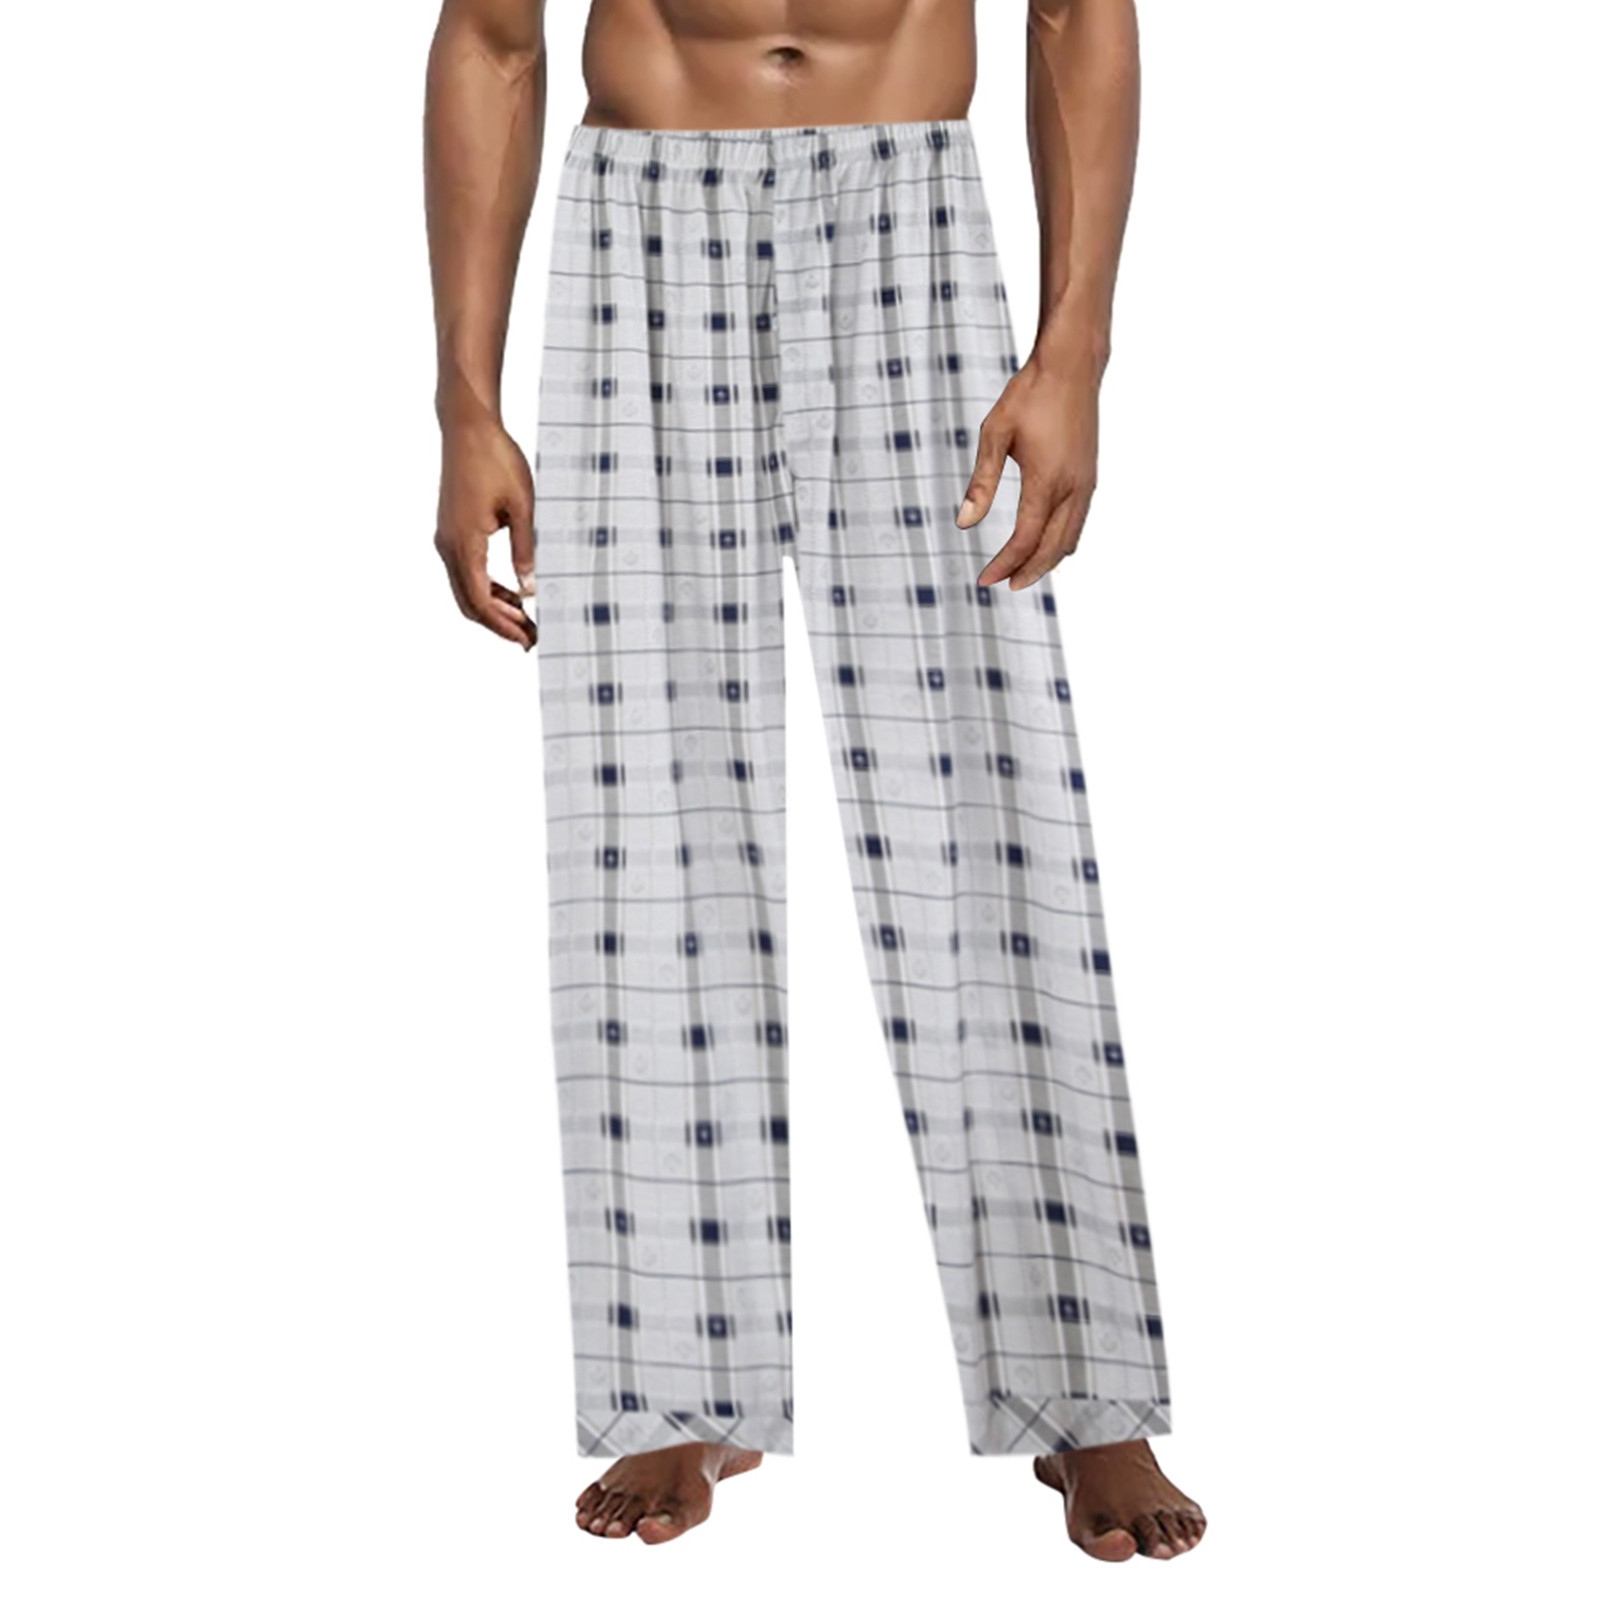 YUHAOTIN Mens Joggers Sweatpants with Zipper Pockets Pajama Pants ...